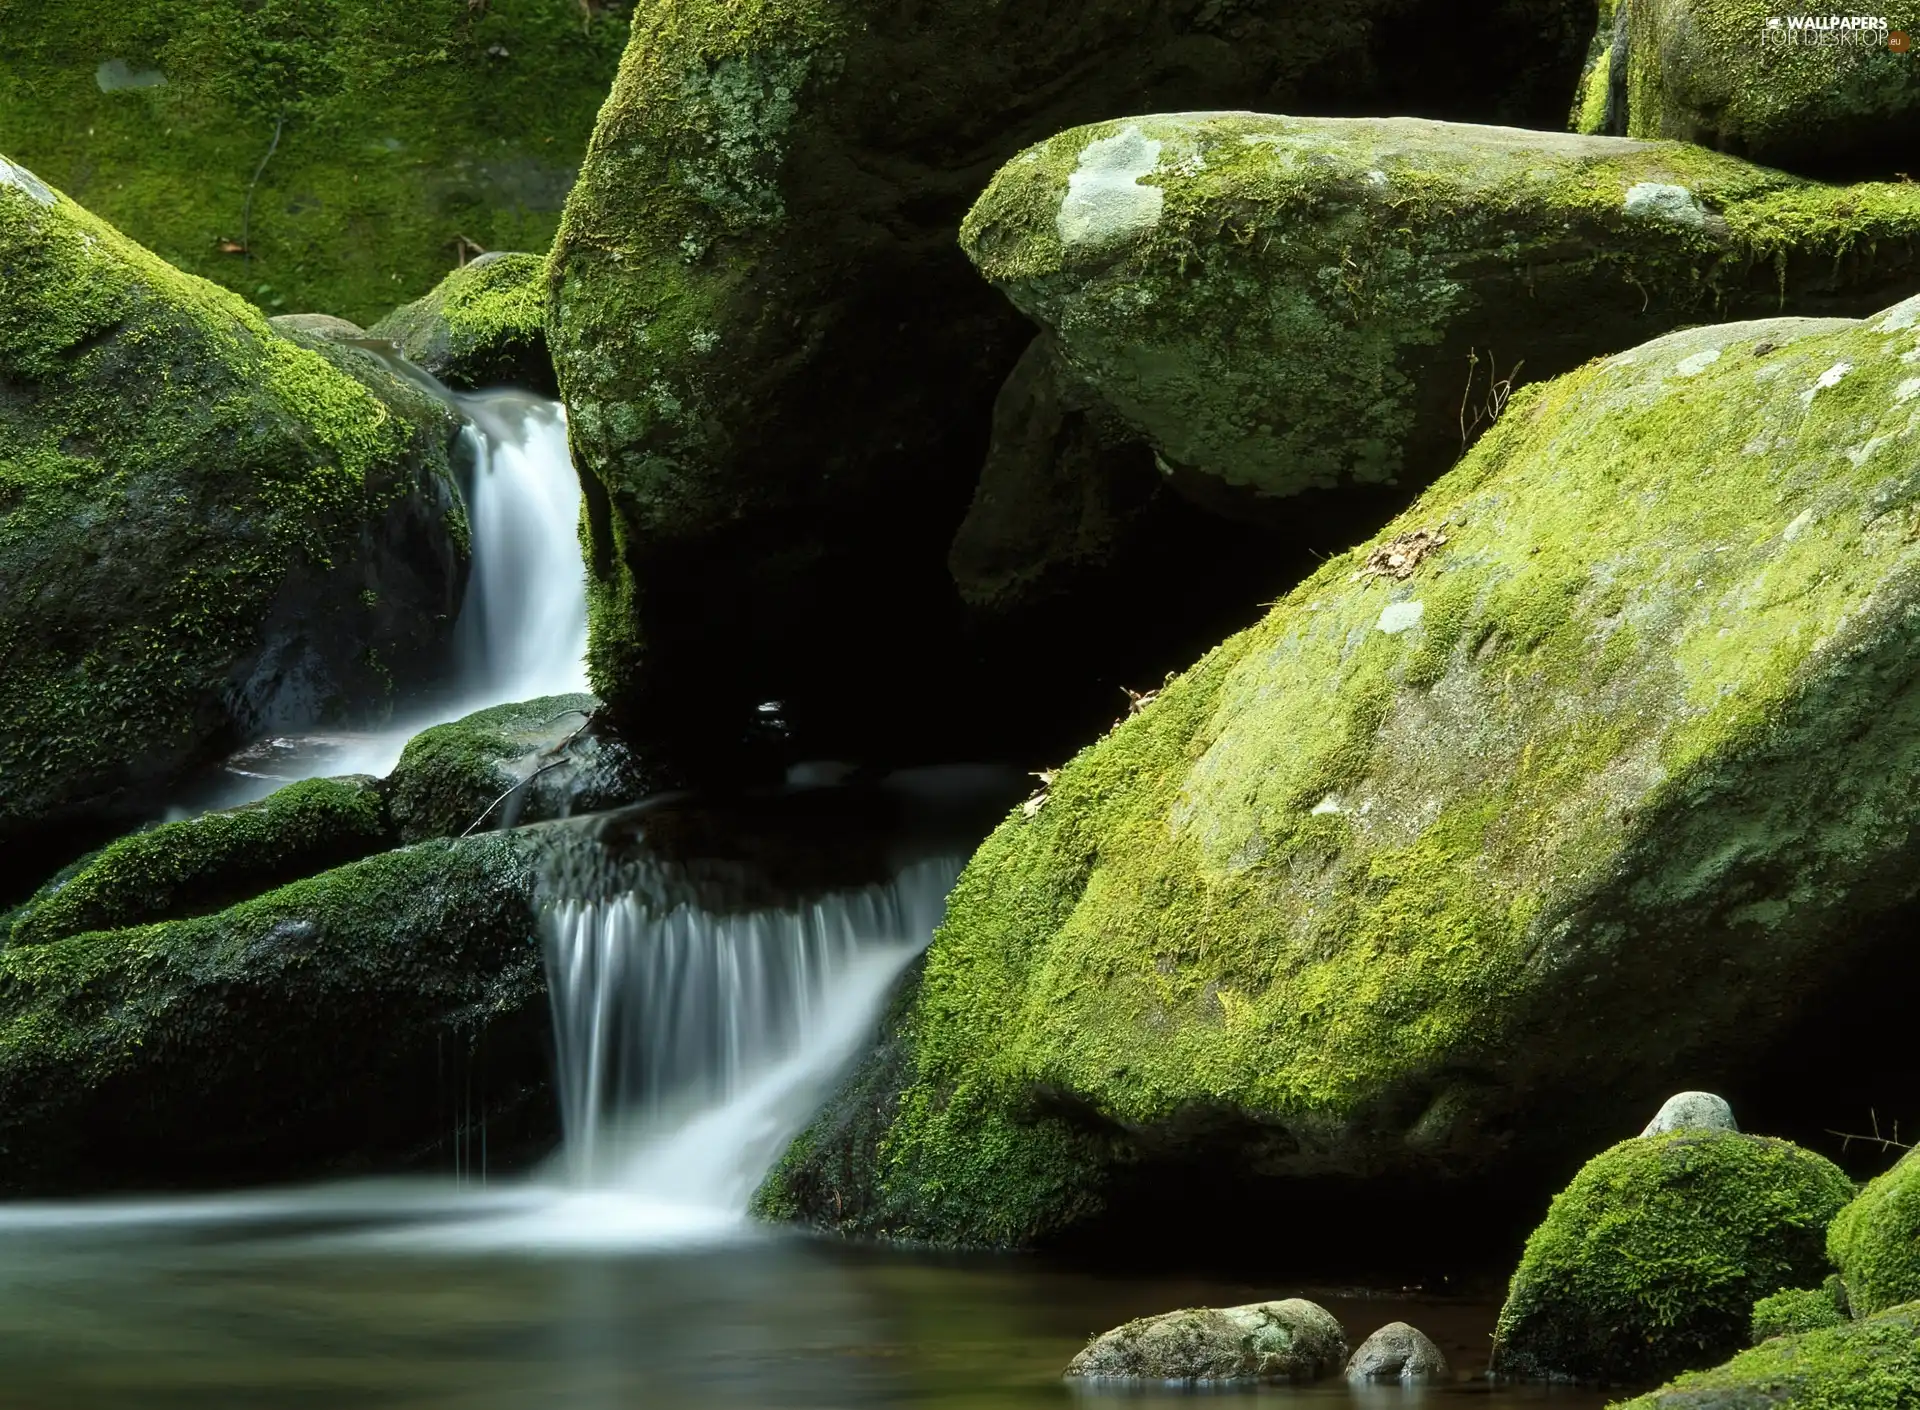 Moss, Stones, stream